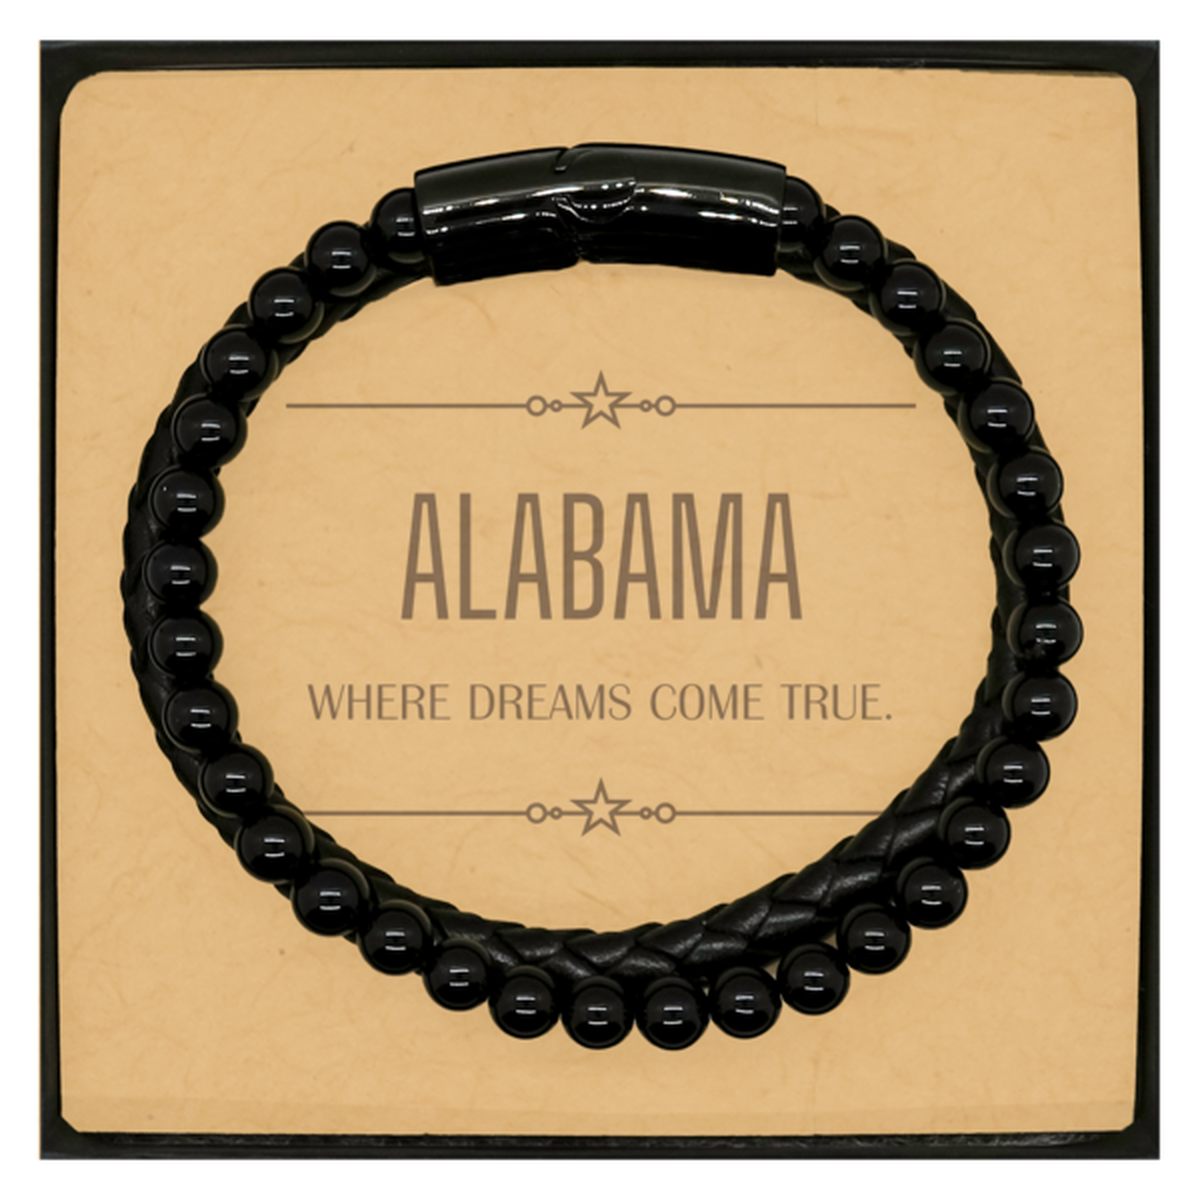 Love Alabama State Stone Leather Bracelets, Alabama Where dreams come true, Birthday Christmas Inspirational Gifts For Alabama Men, Women, Friends